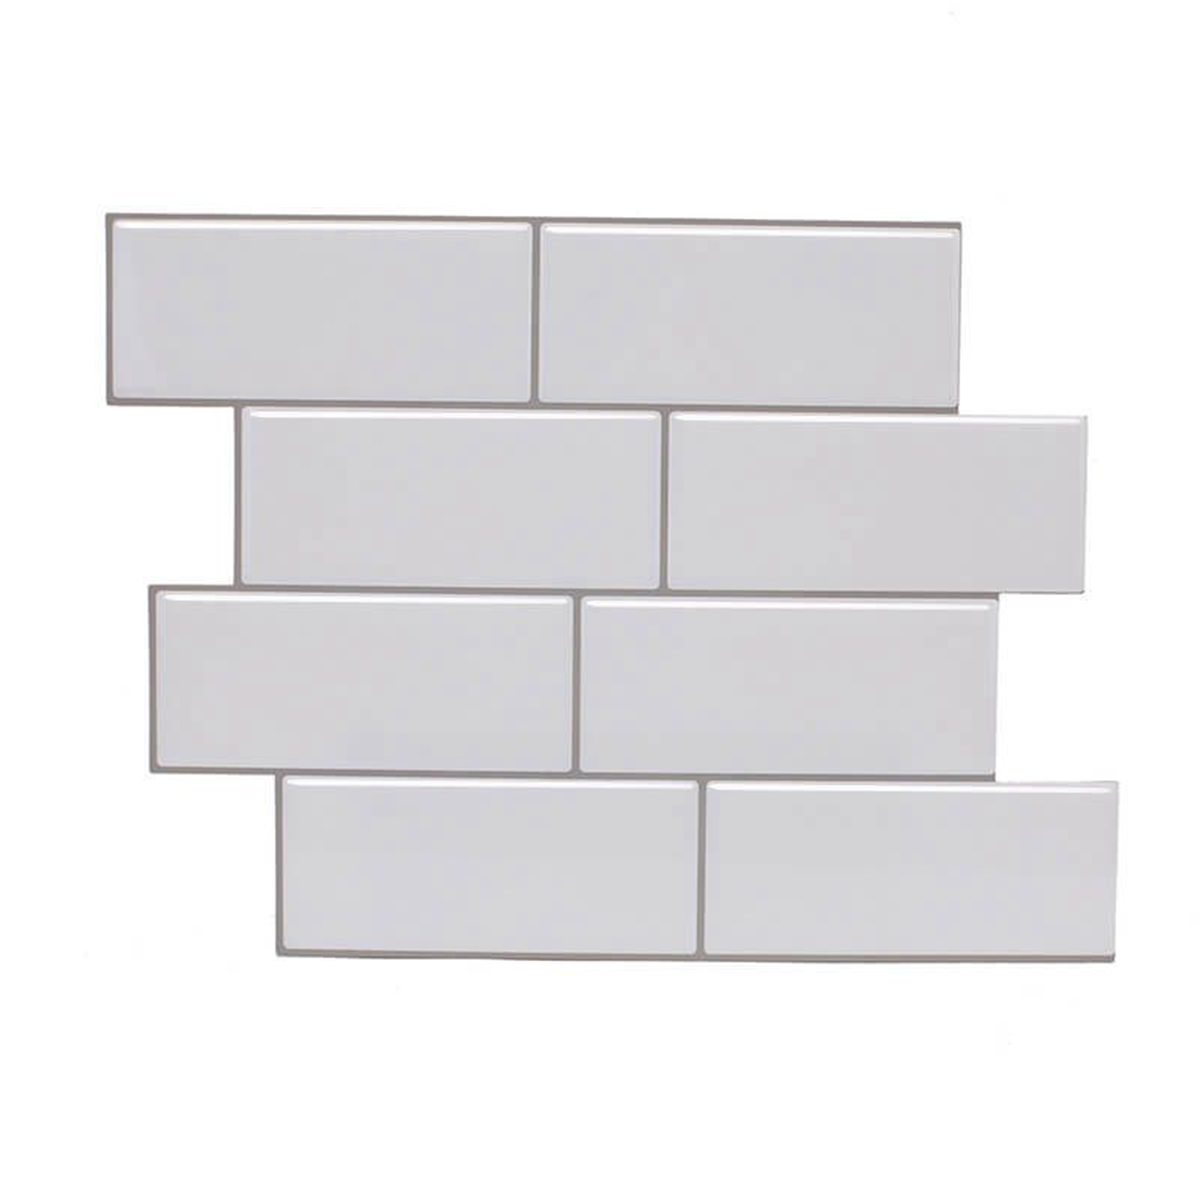 12inch-DIY-Tile-Stickers-3D-Brick-Wall-Self-adhesive-Sticker-Bathroom-Kitchen-1802619-6